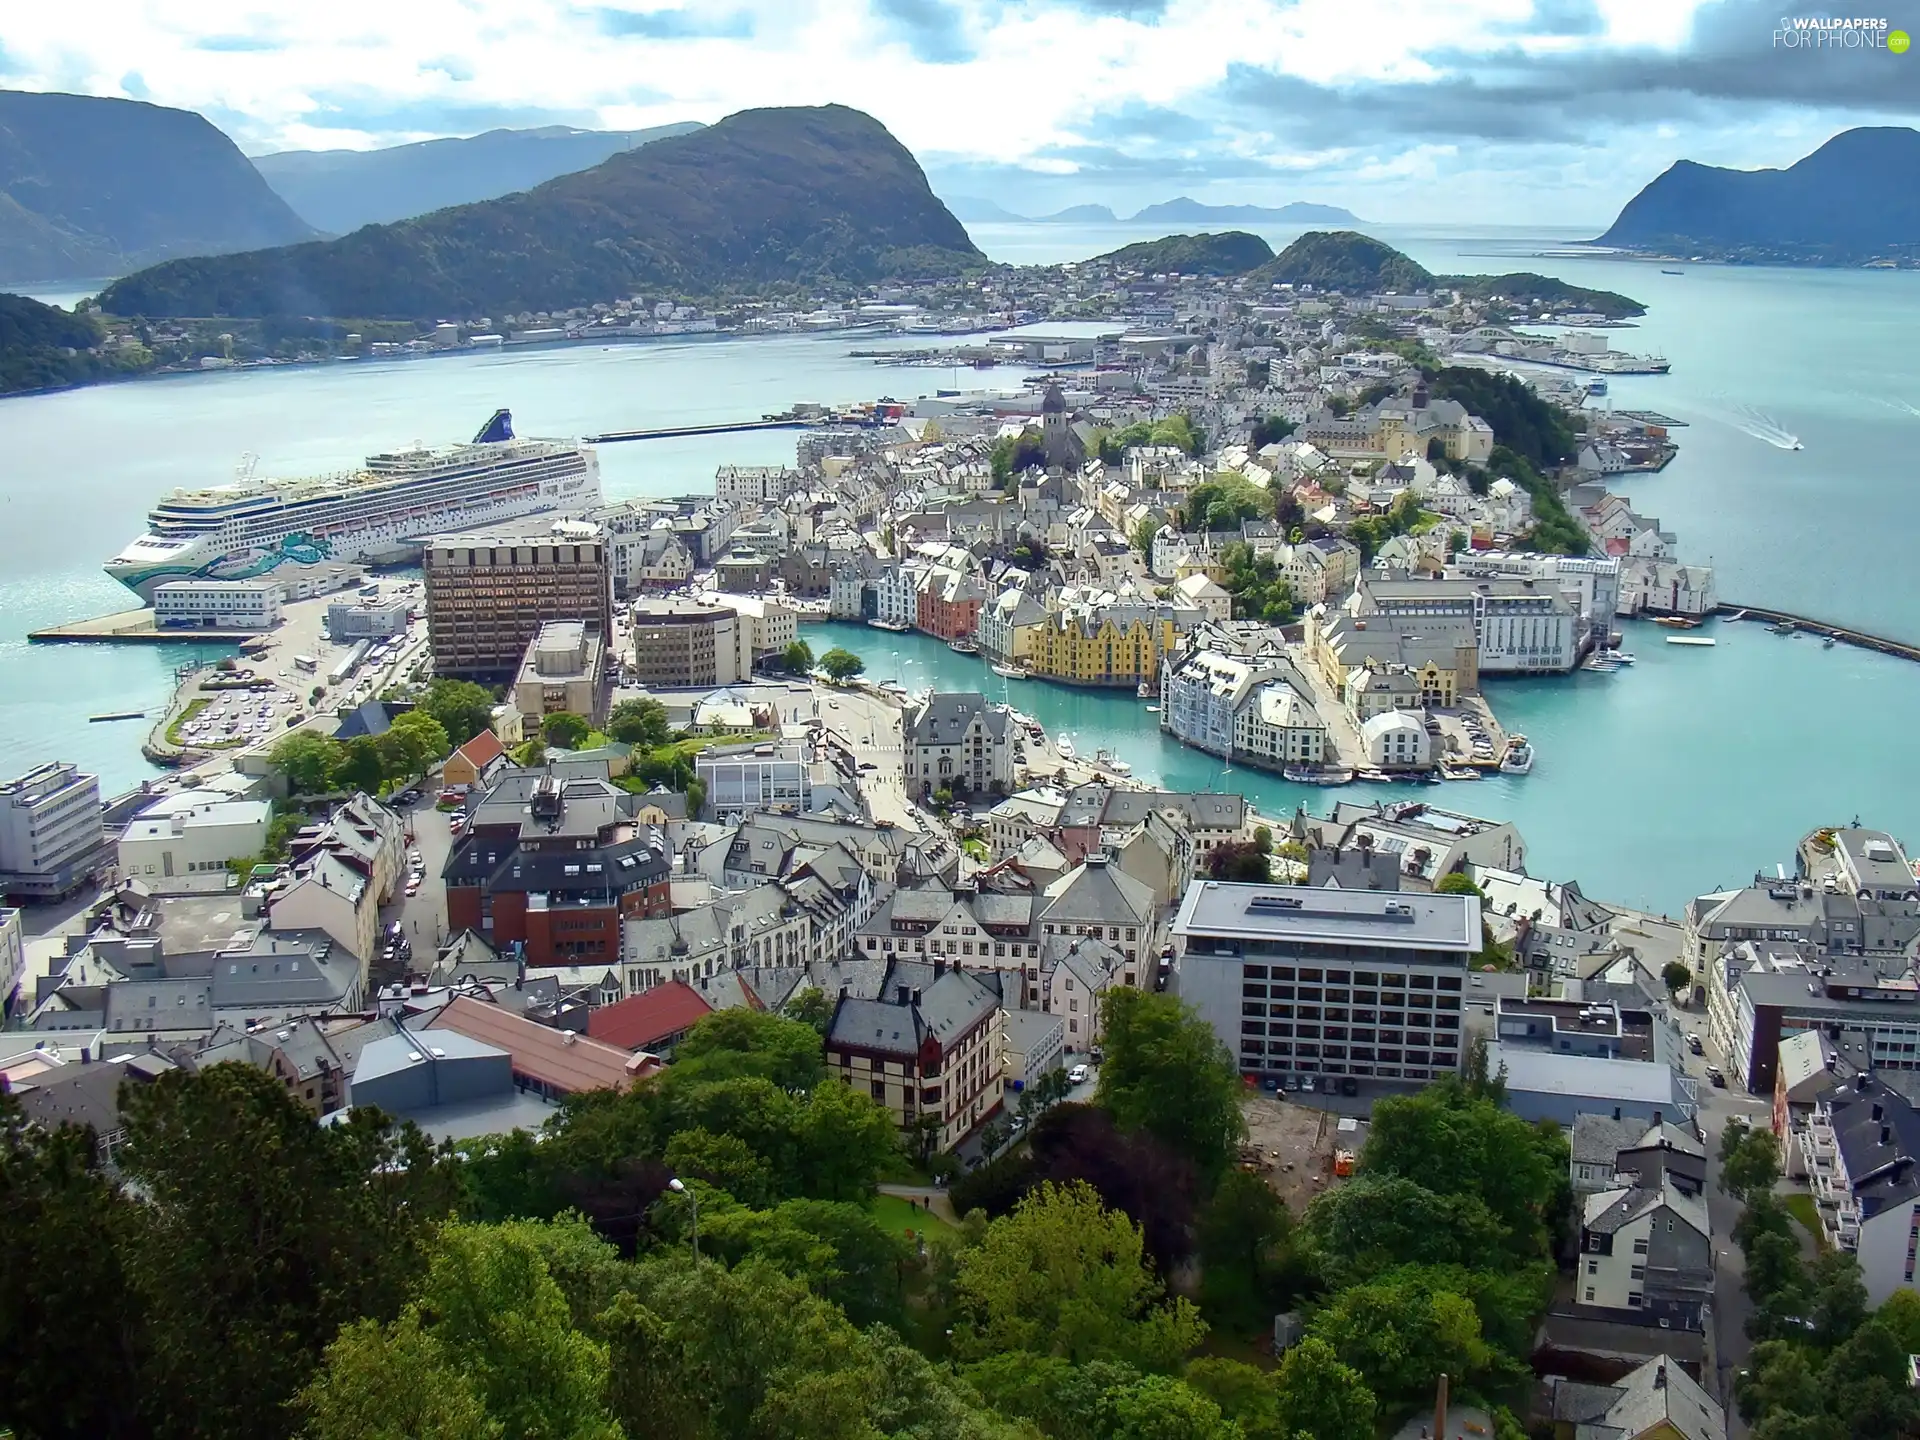 town, Norway, panorama